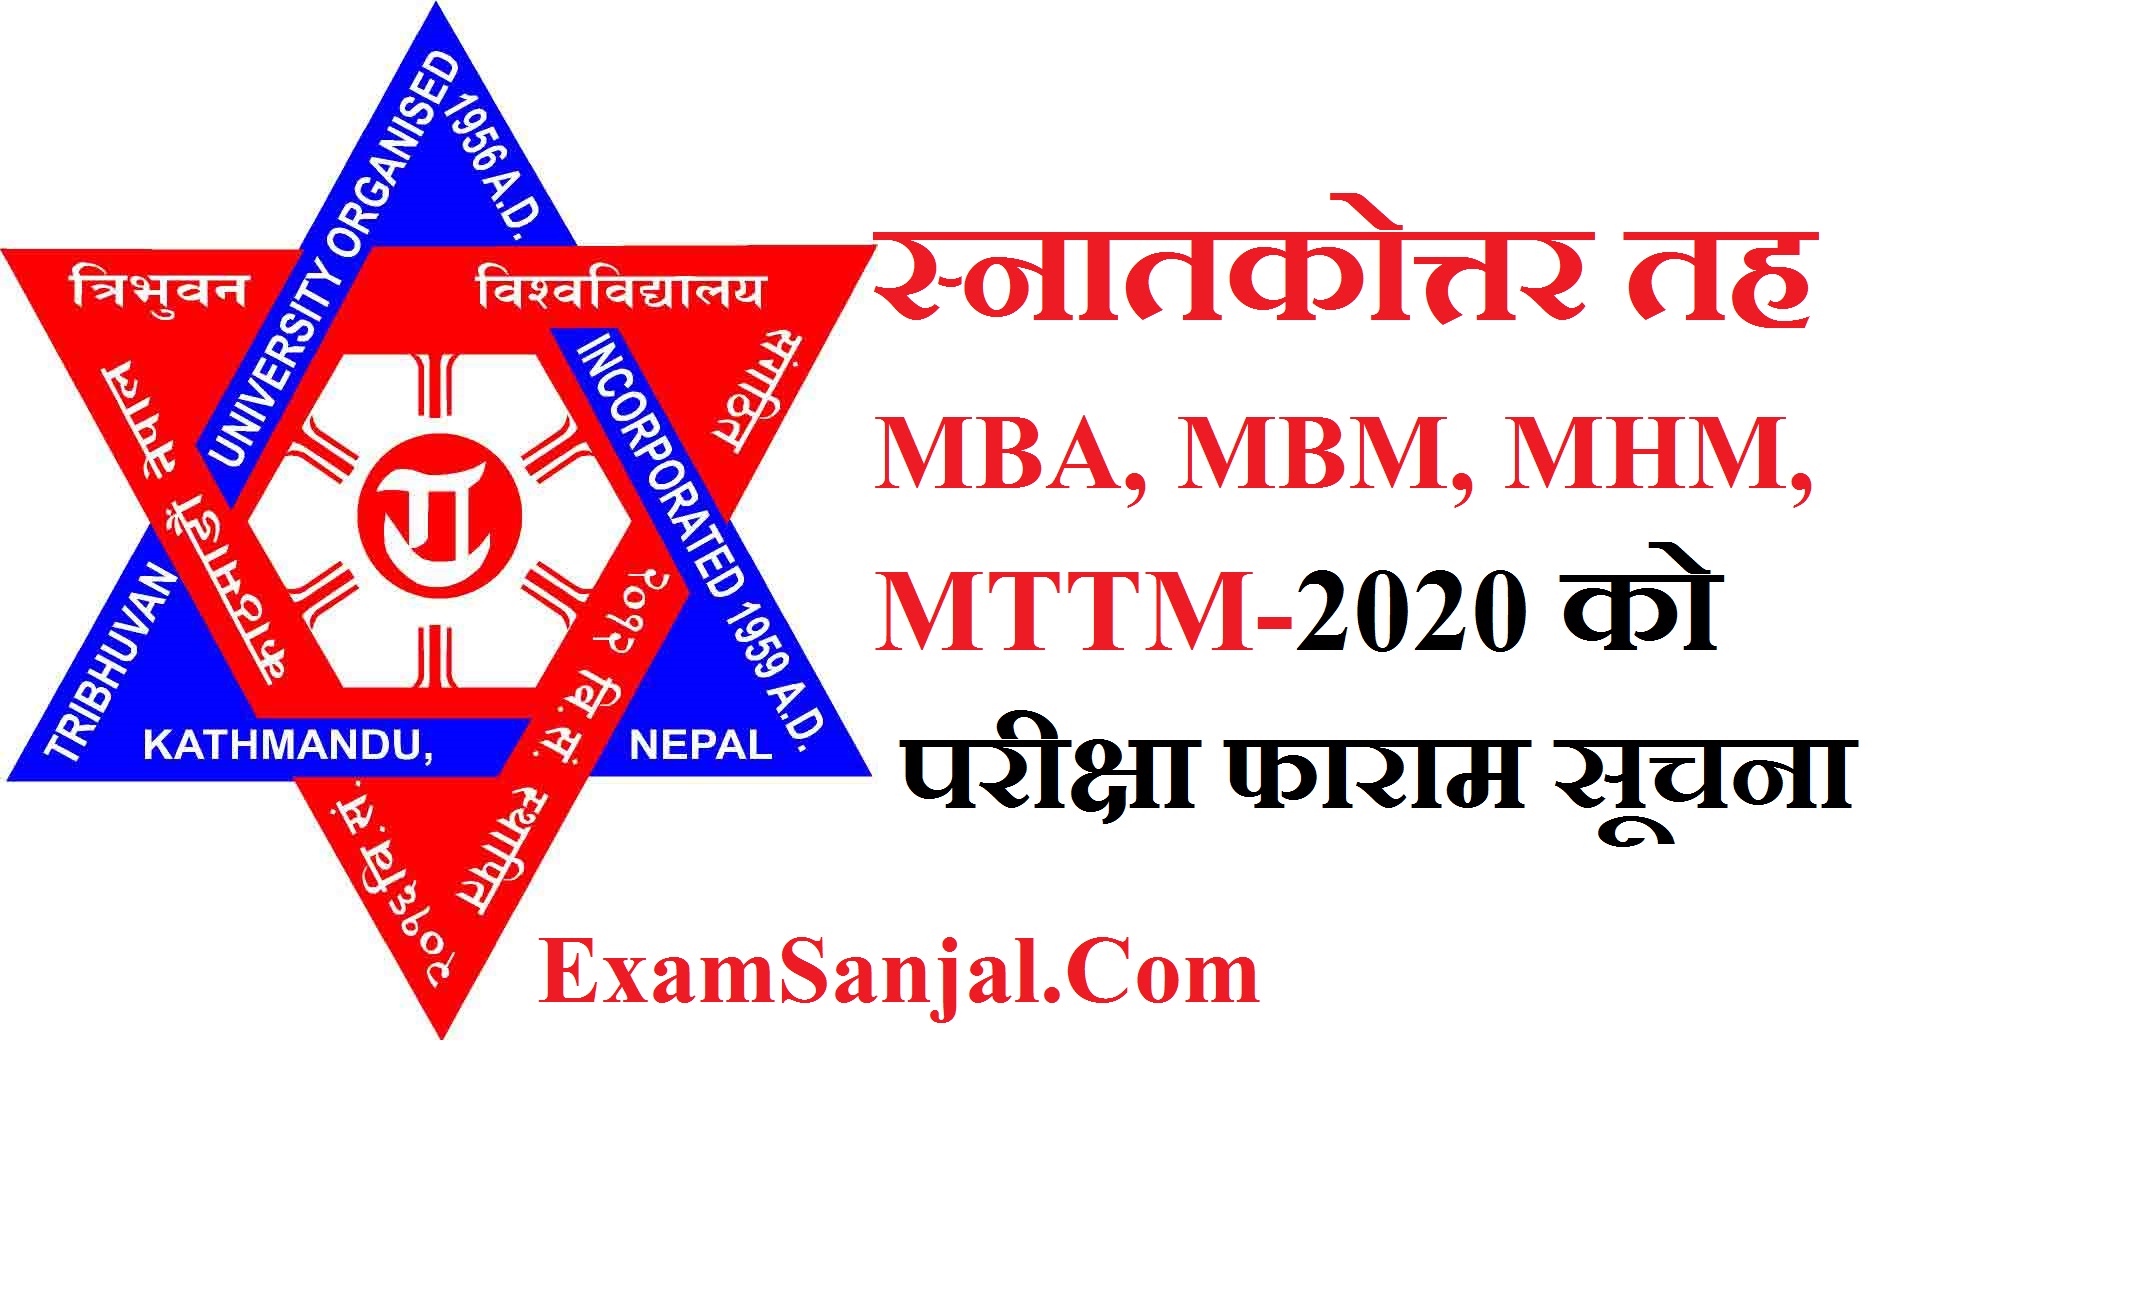 Exam Form notice for MBM, MBA-E, MHM and MTTM program by TU ( TU Exam Form)